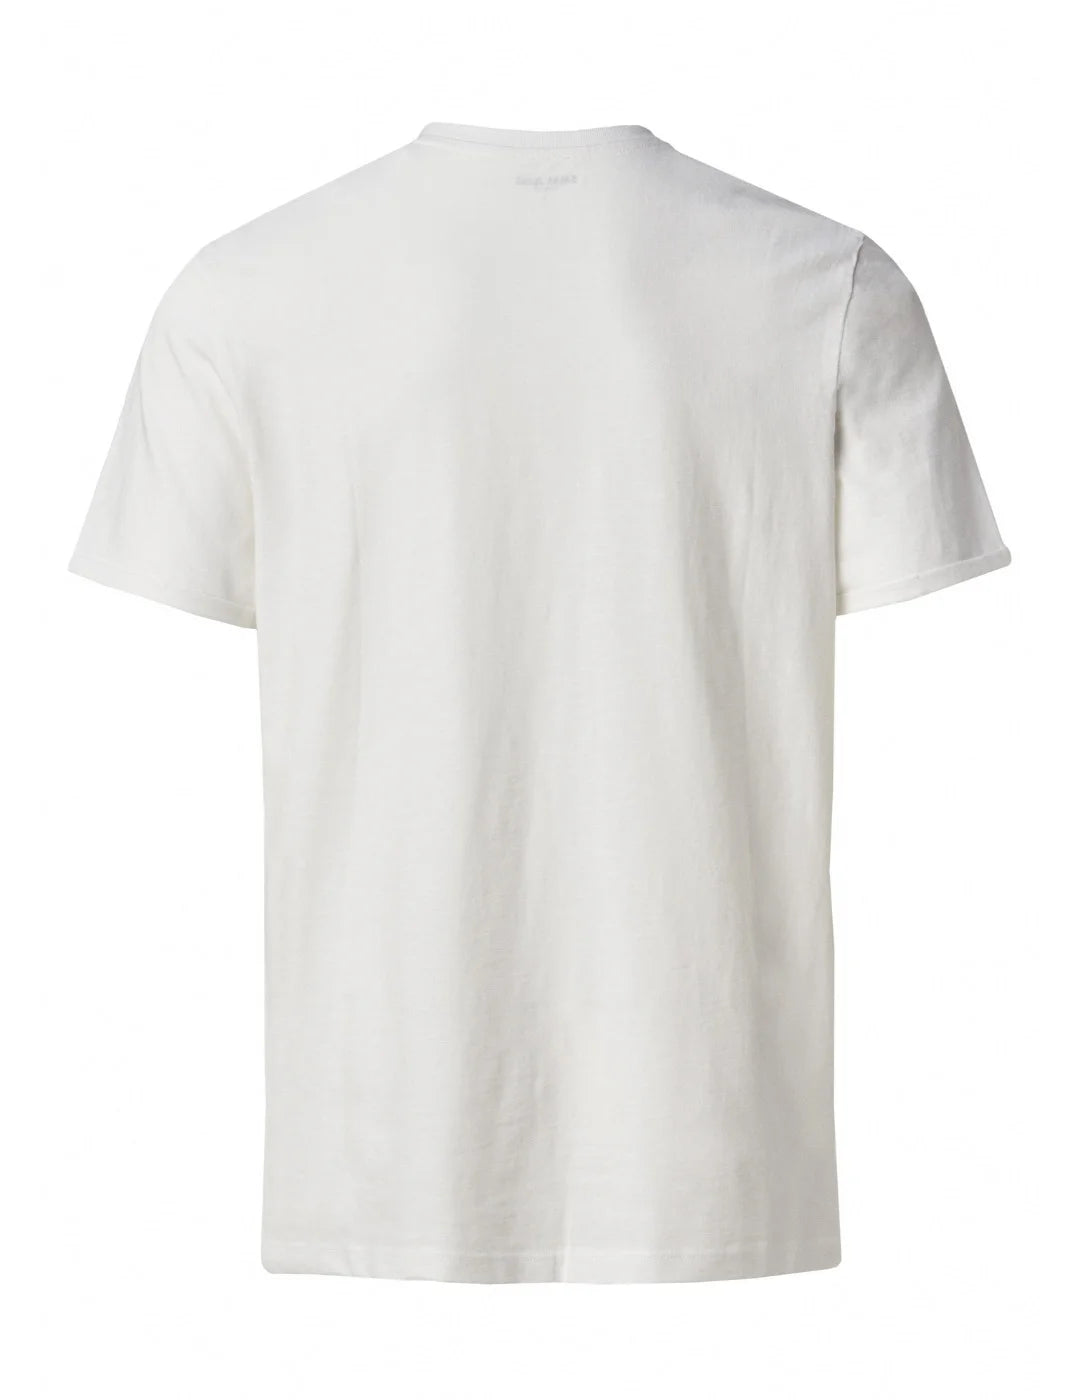 Camiseta Manga Corta Blanca Salsa | Bicos de Fío